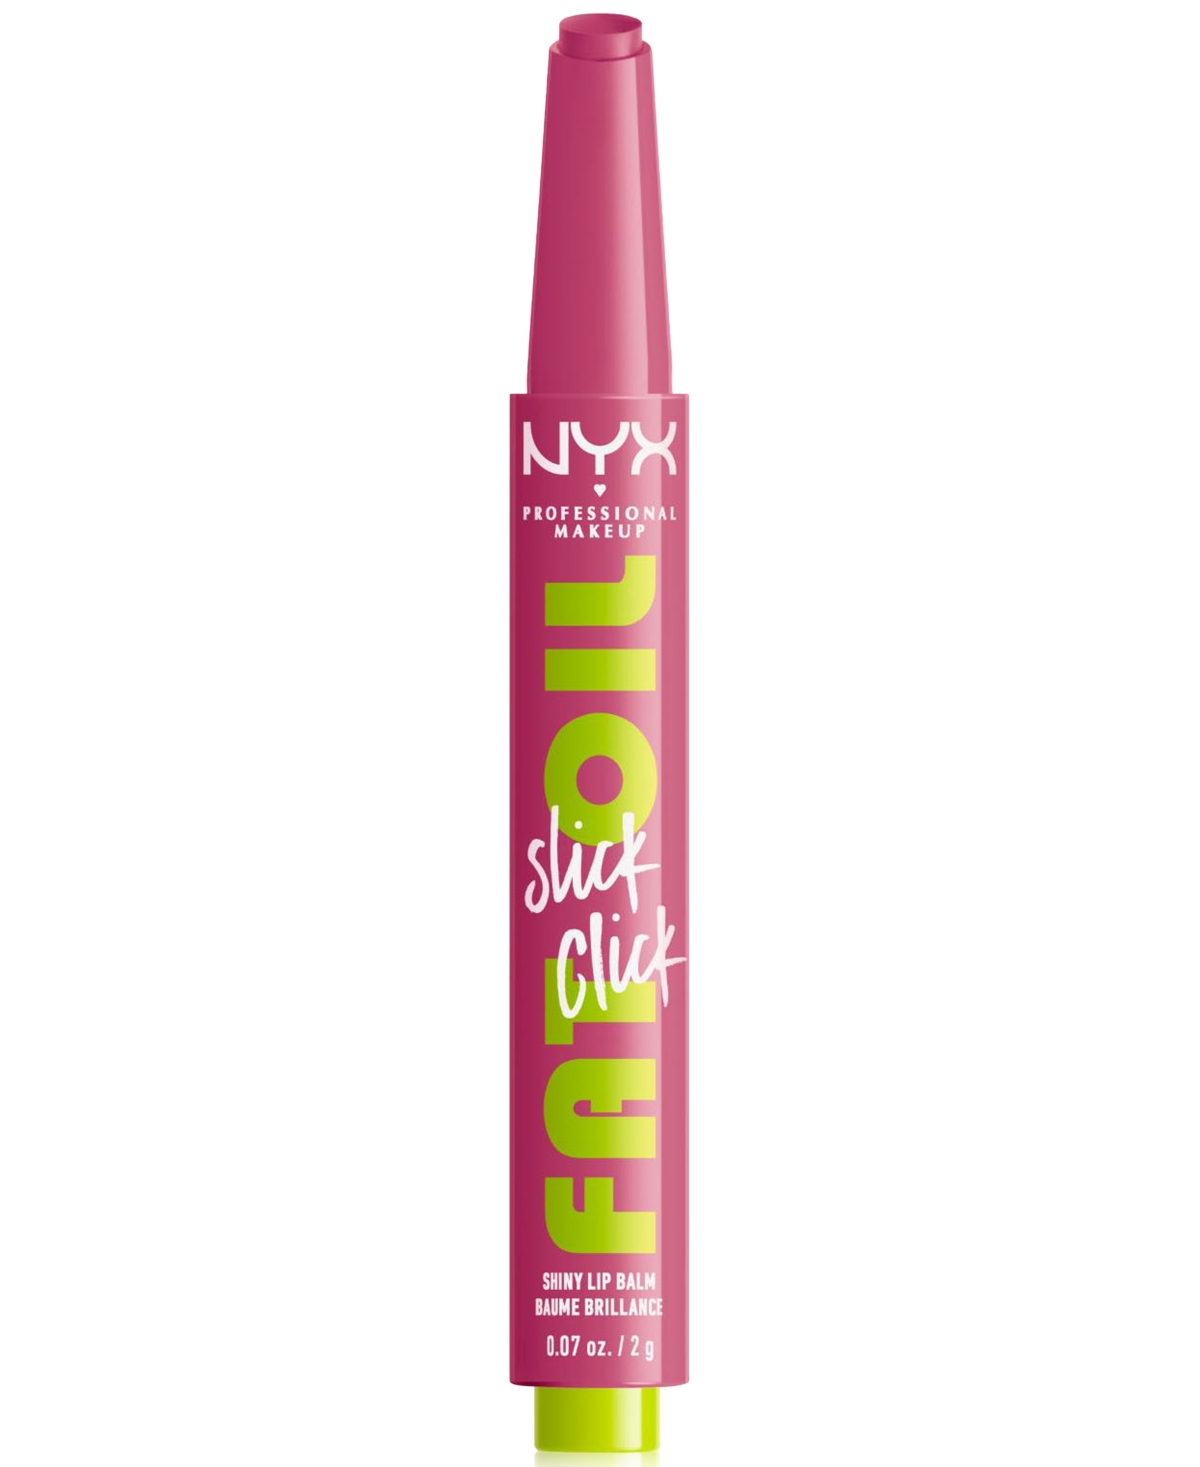 Nyx Professional Makeup Fat Oil Slick Click In Dm Me (lilac Pink)